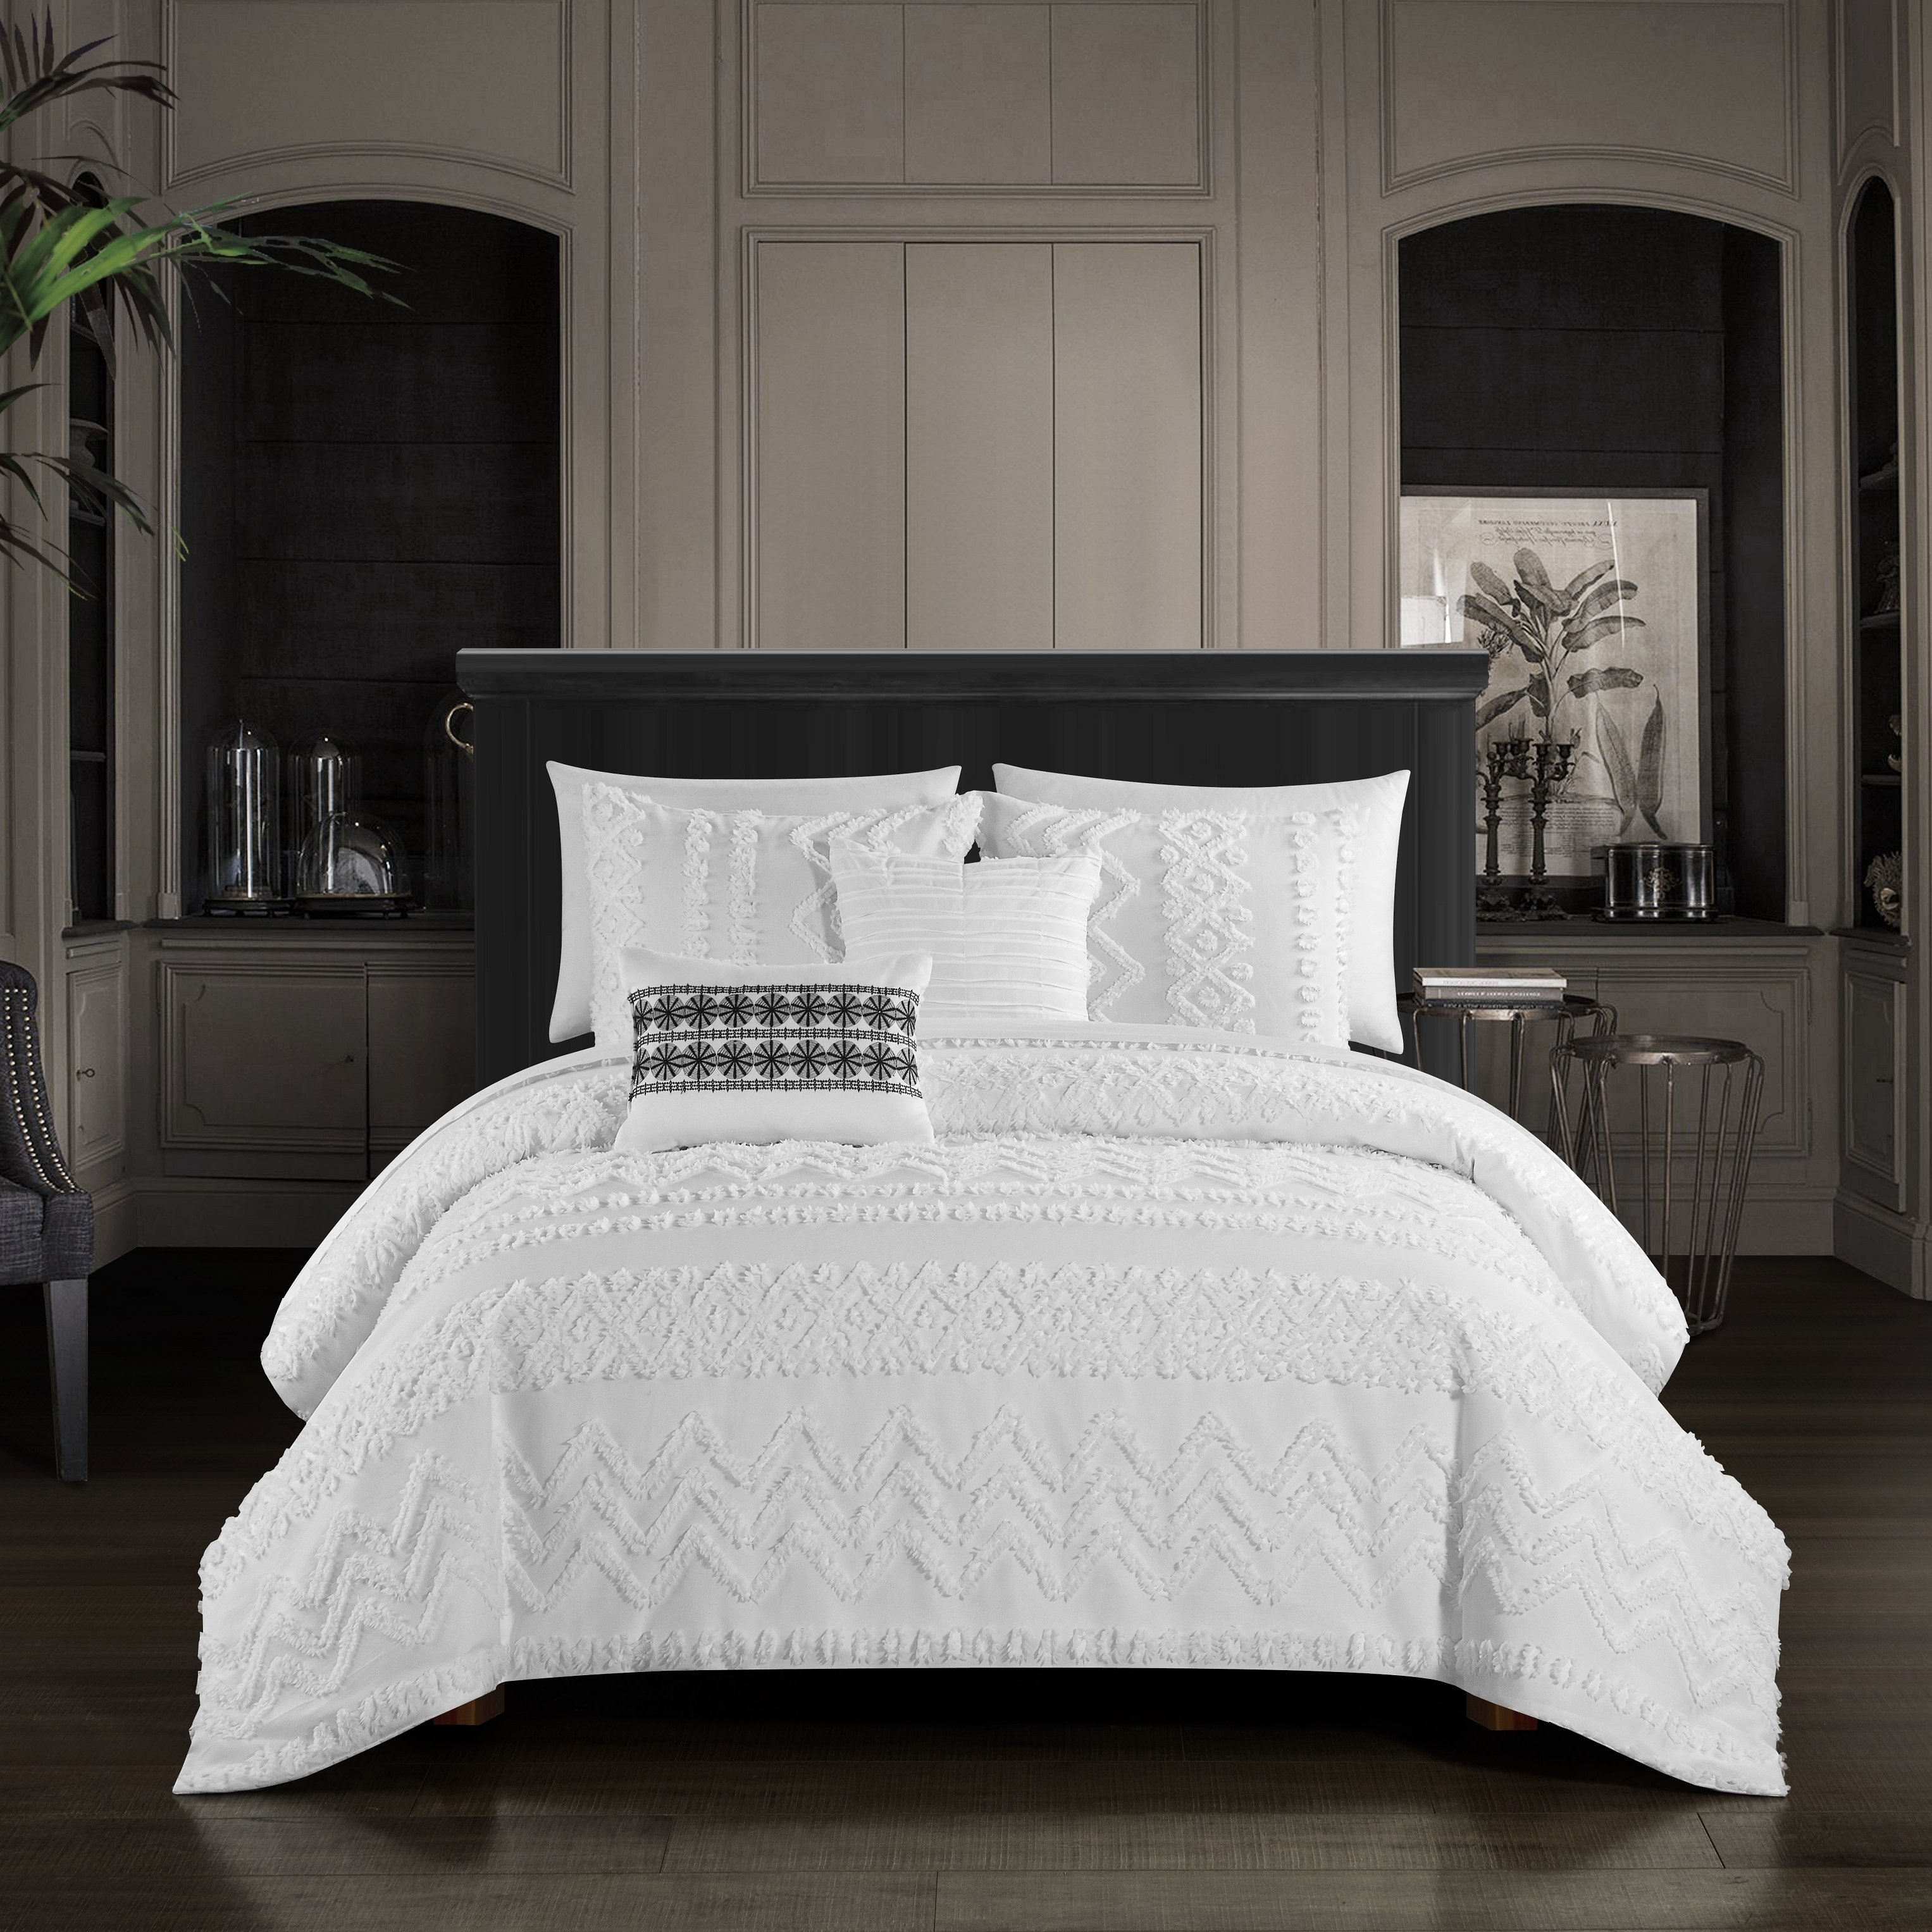 Jenson 5 Piece Comforter Set Jacquard Chevron Geometric Pattern Design Bedding - White, Queen